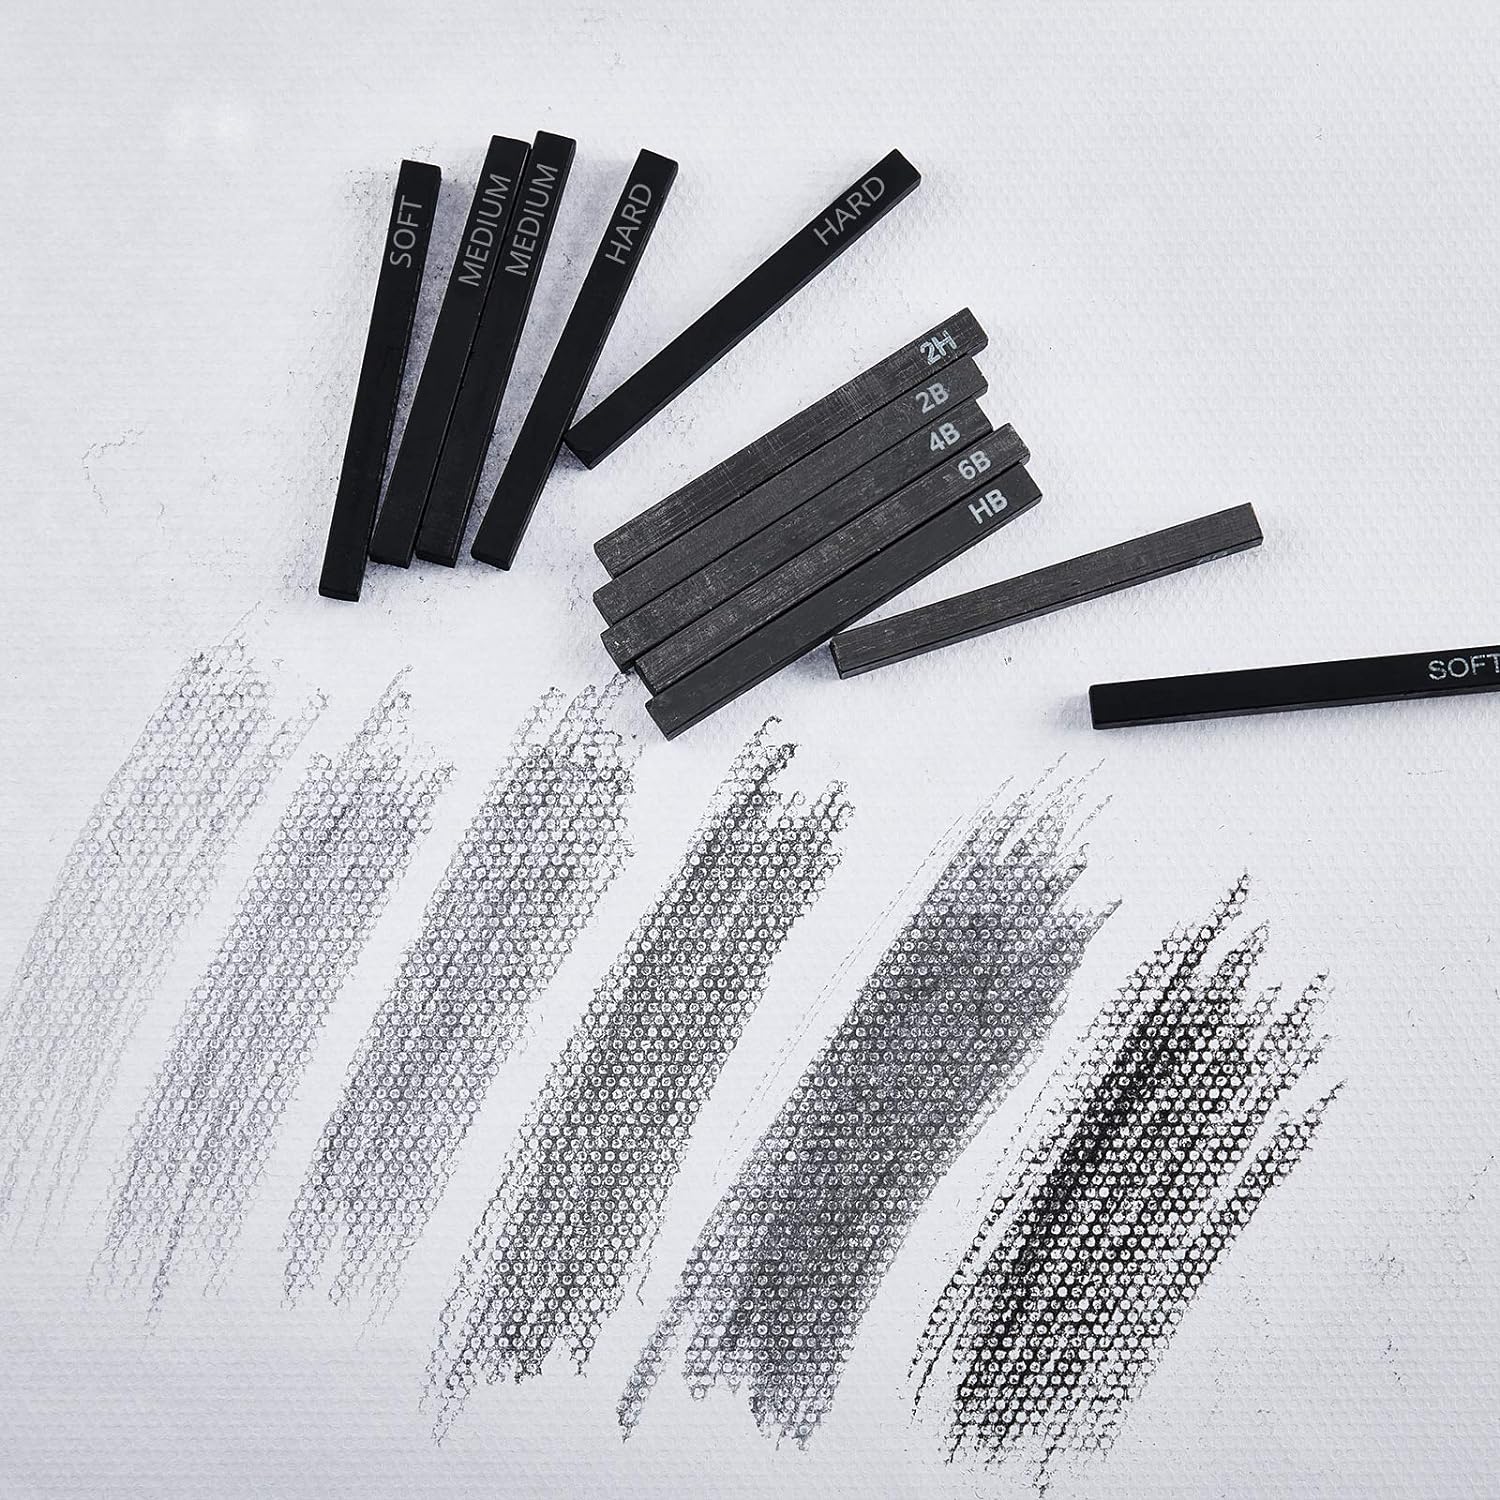 12Pcs Graphite Material Sticks Square Compressed Charcoal Set